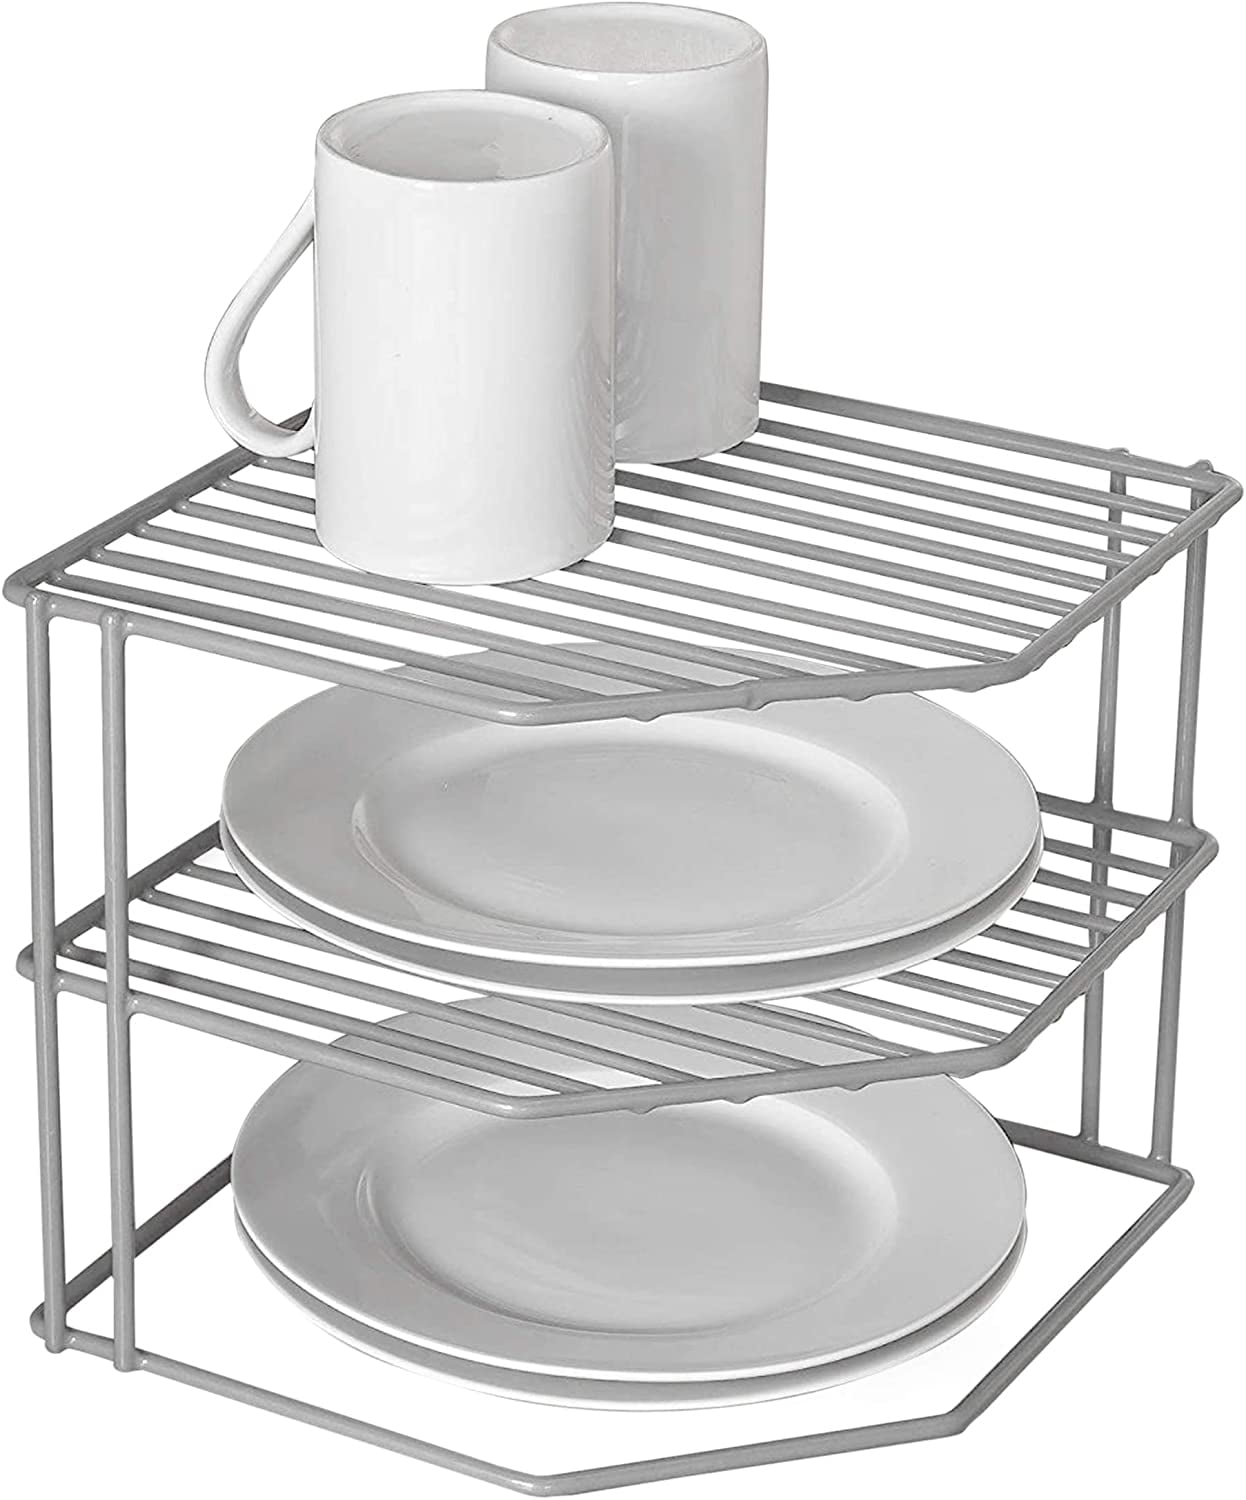 Chrome 3 Tier Corner Plate Rack Dish Stand Kitchen Plates Holder Organizer Tidy 